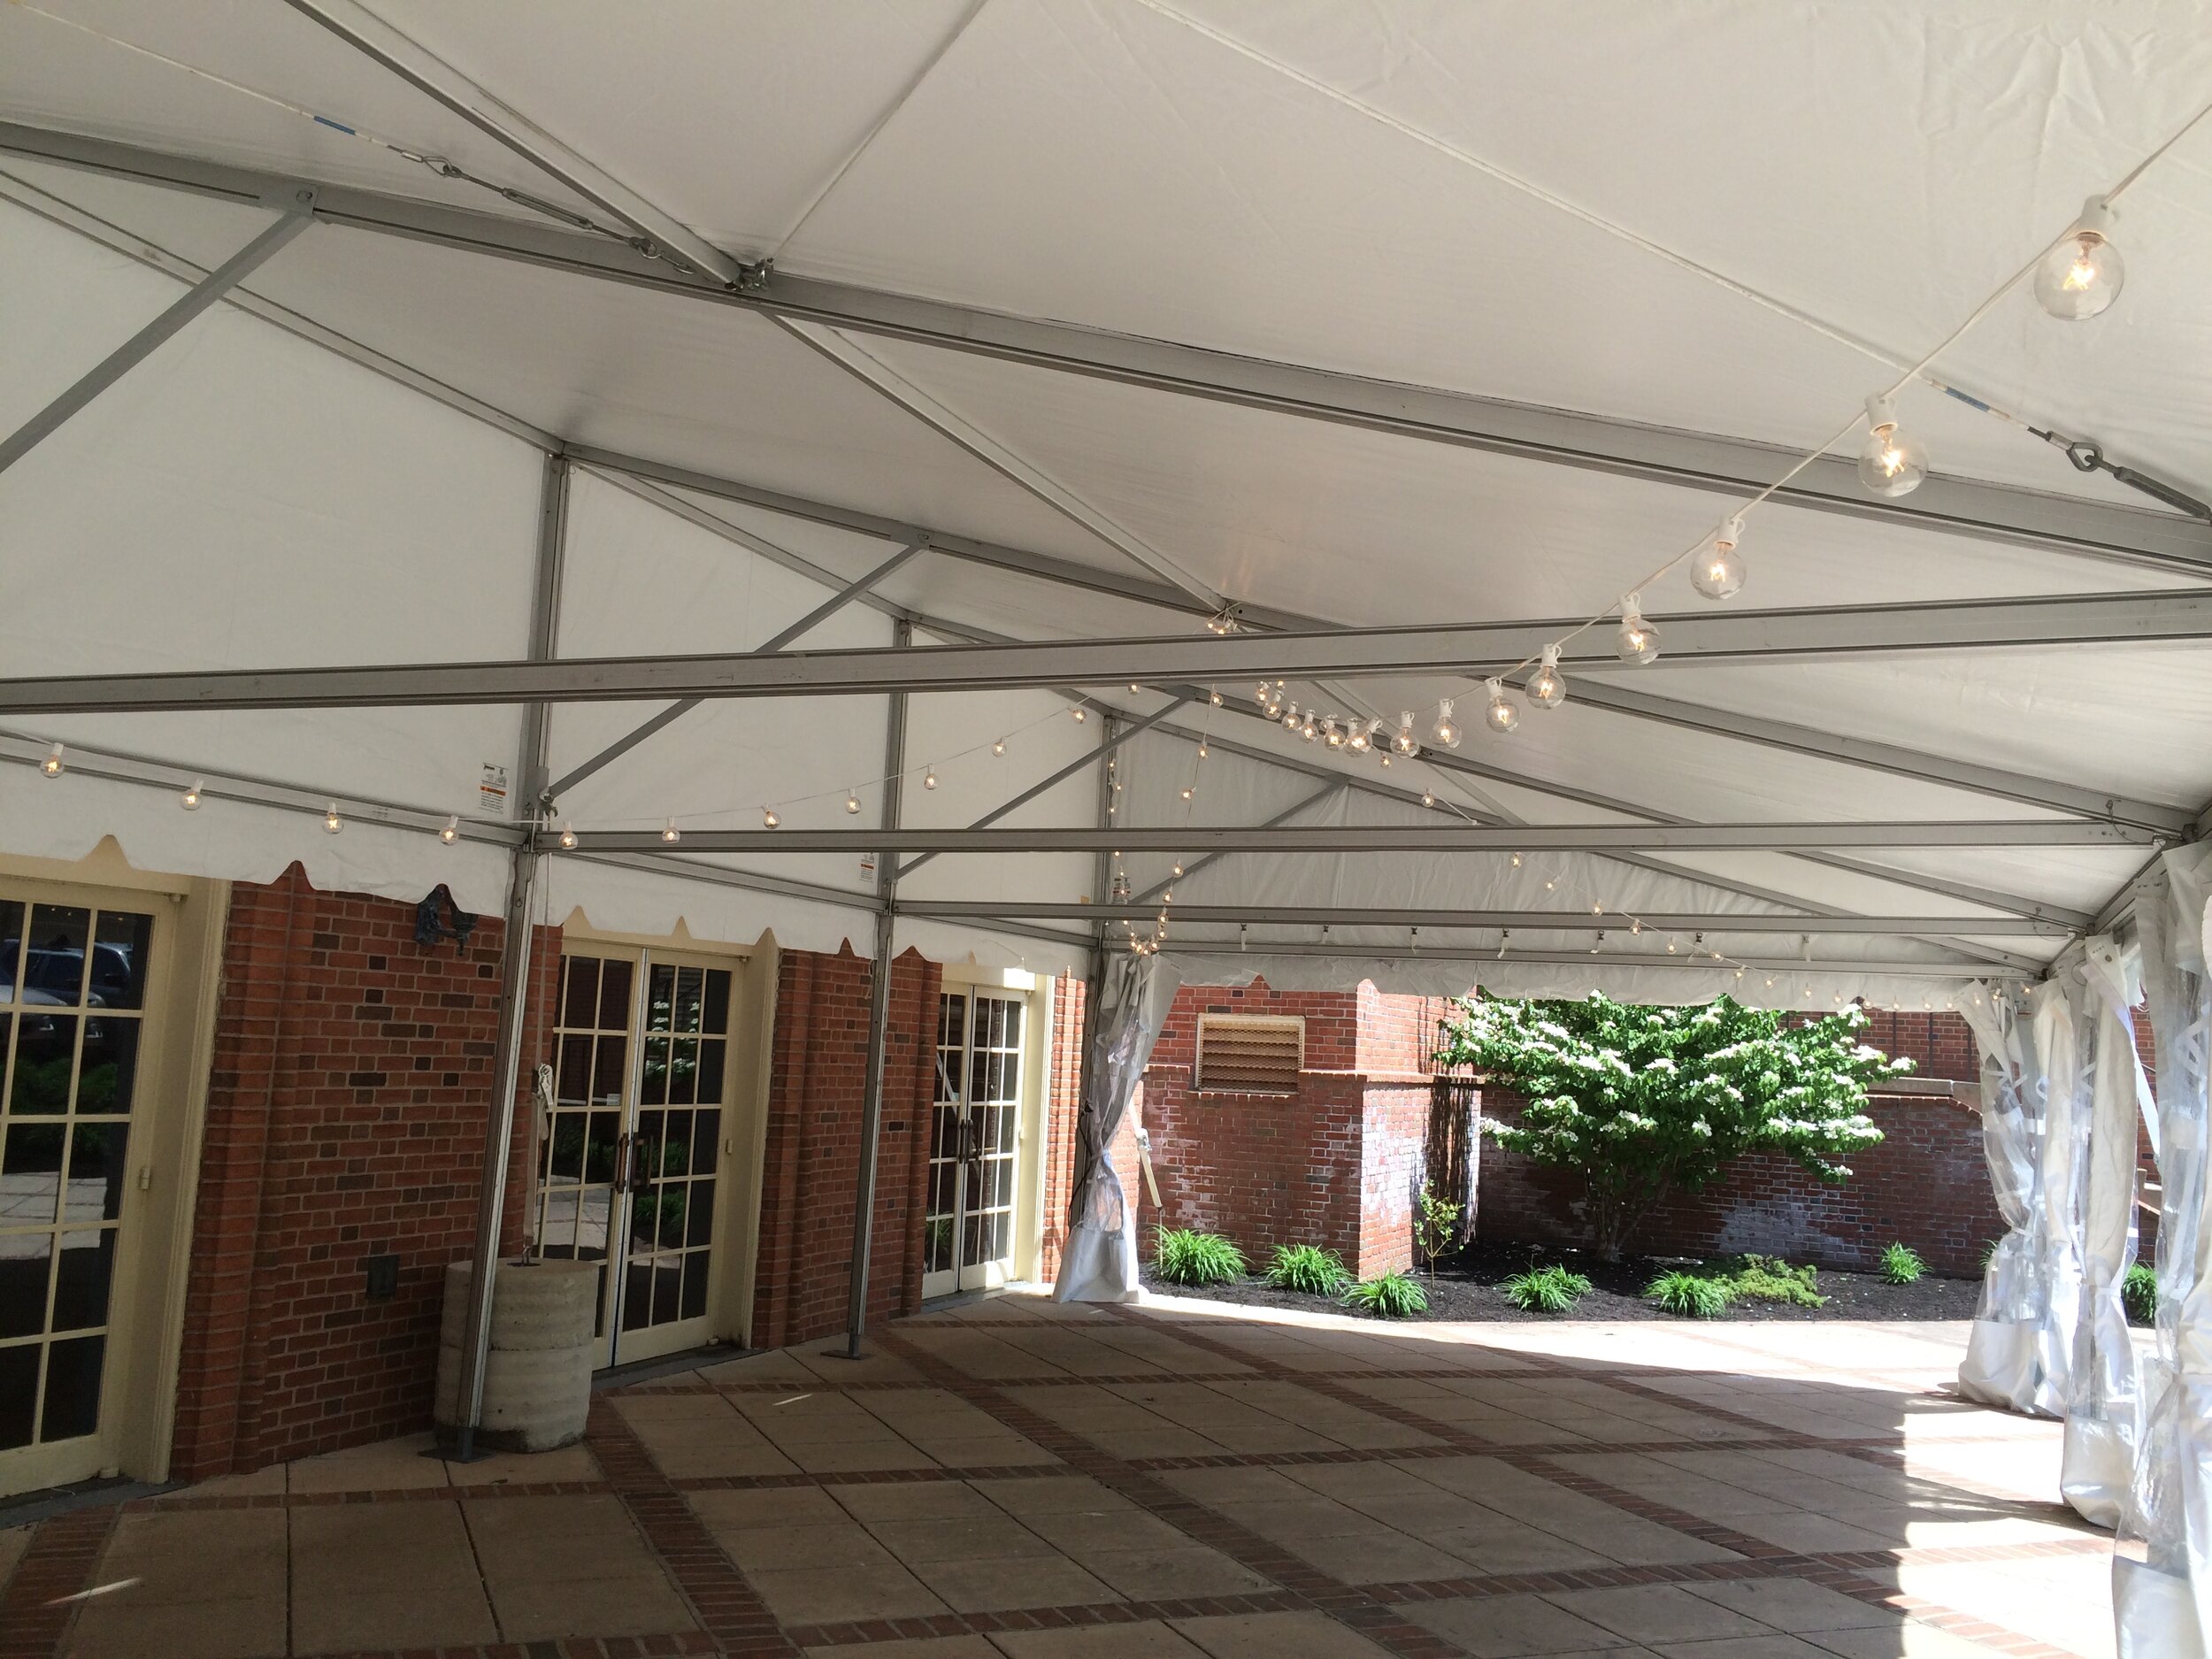 University tent installation service